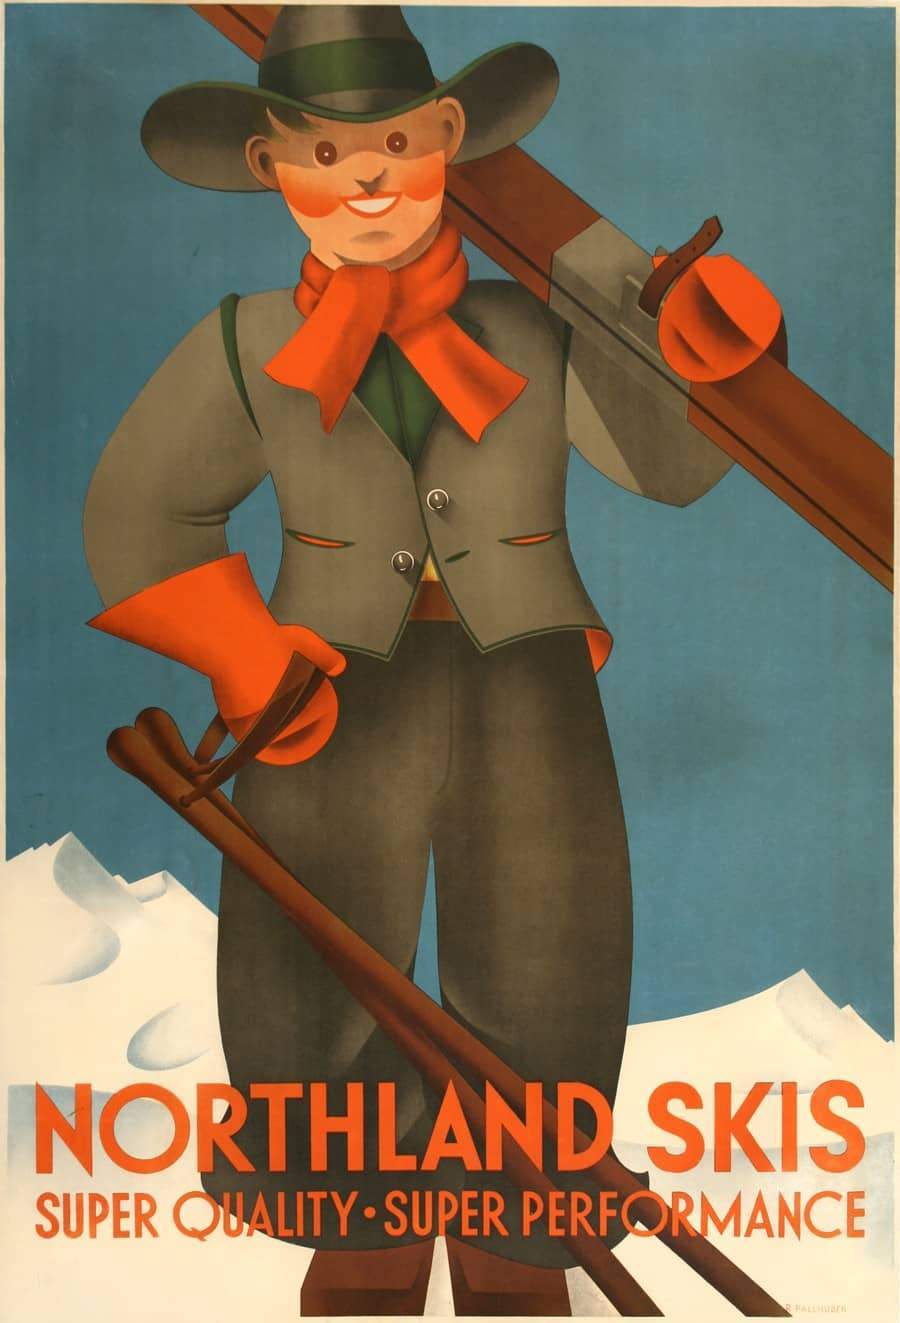 Original Northland Skis Poster c1935 by Pallhuber